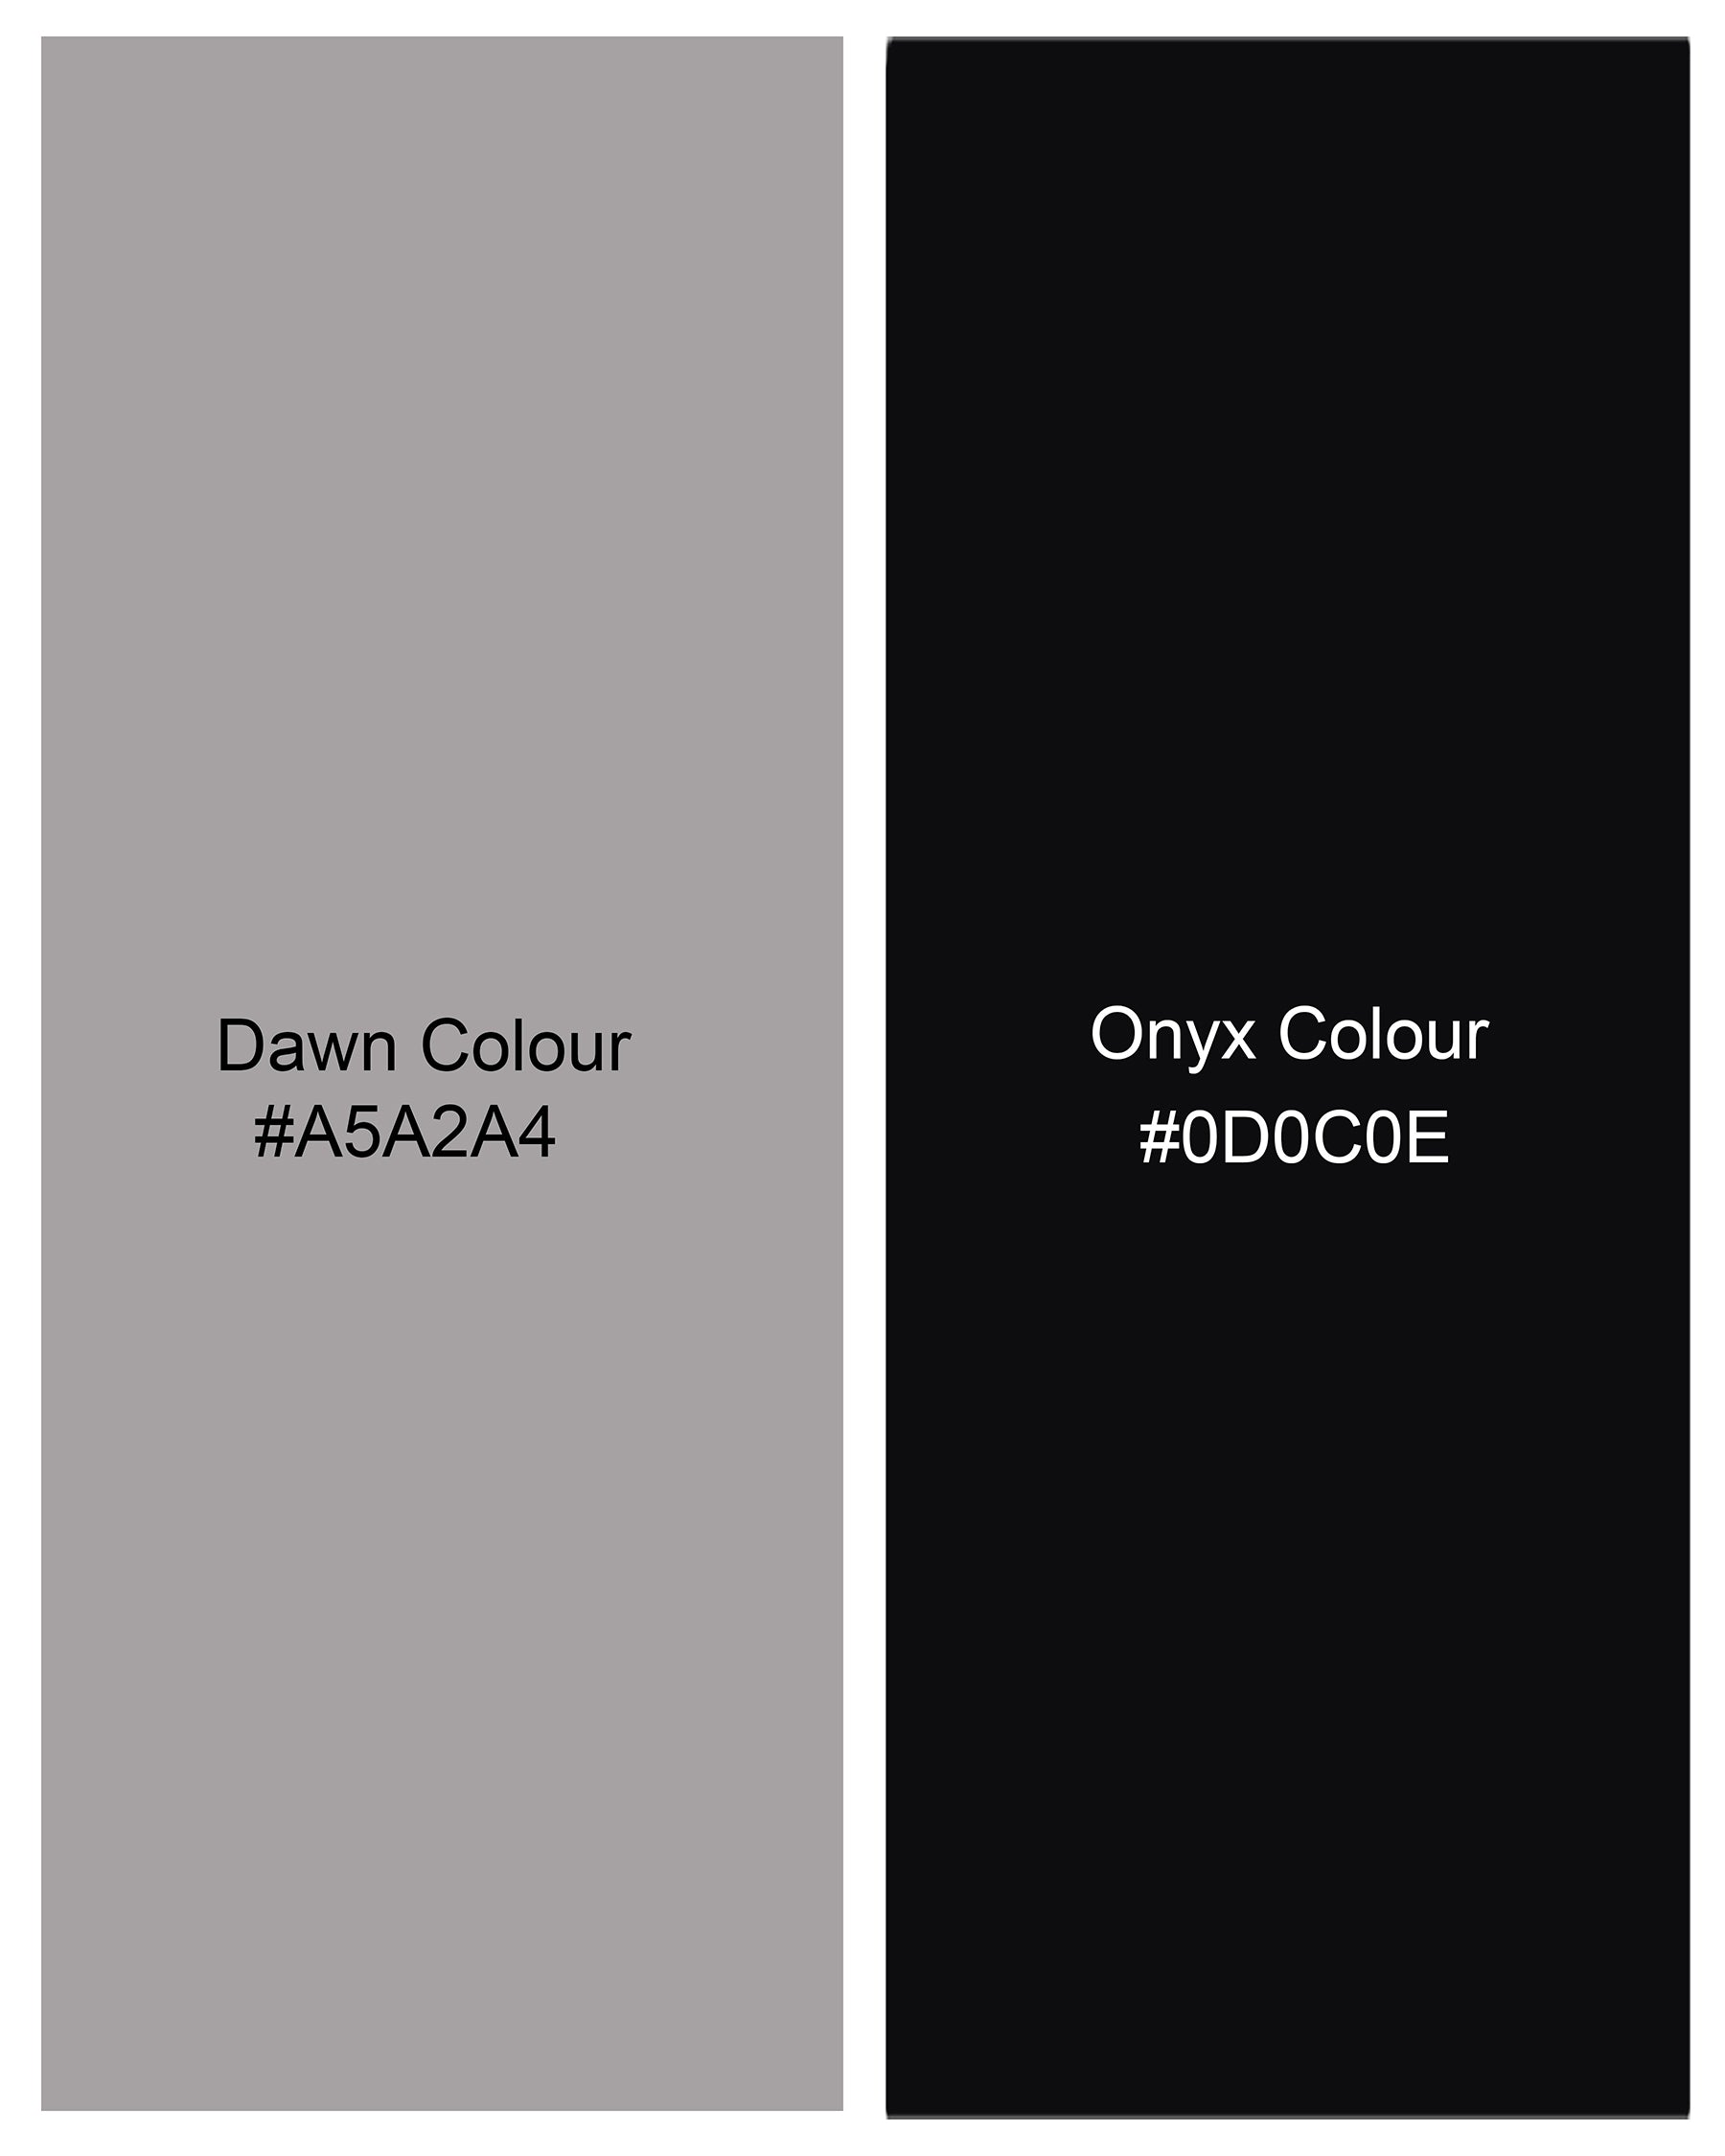 Dawn Gray and Onyx Black textured Designer Nehru Jacket  WC2182-36, WC2182-38, WC2182-40, WC2182-42, WC2182-44, WC2182-46, WC2182-48, WC2182-50, WC2182-52, WC2182-54, WC2182-56, WC2182-58, WC2182-60